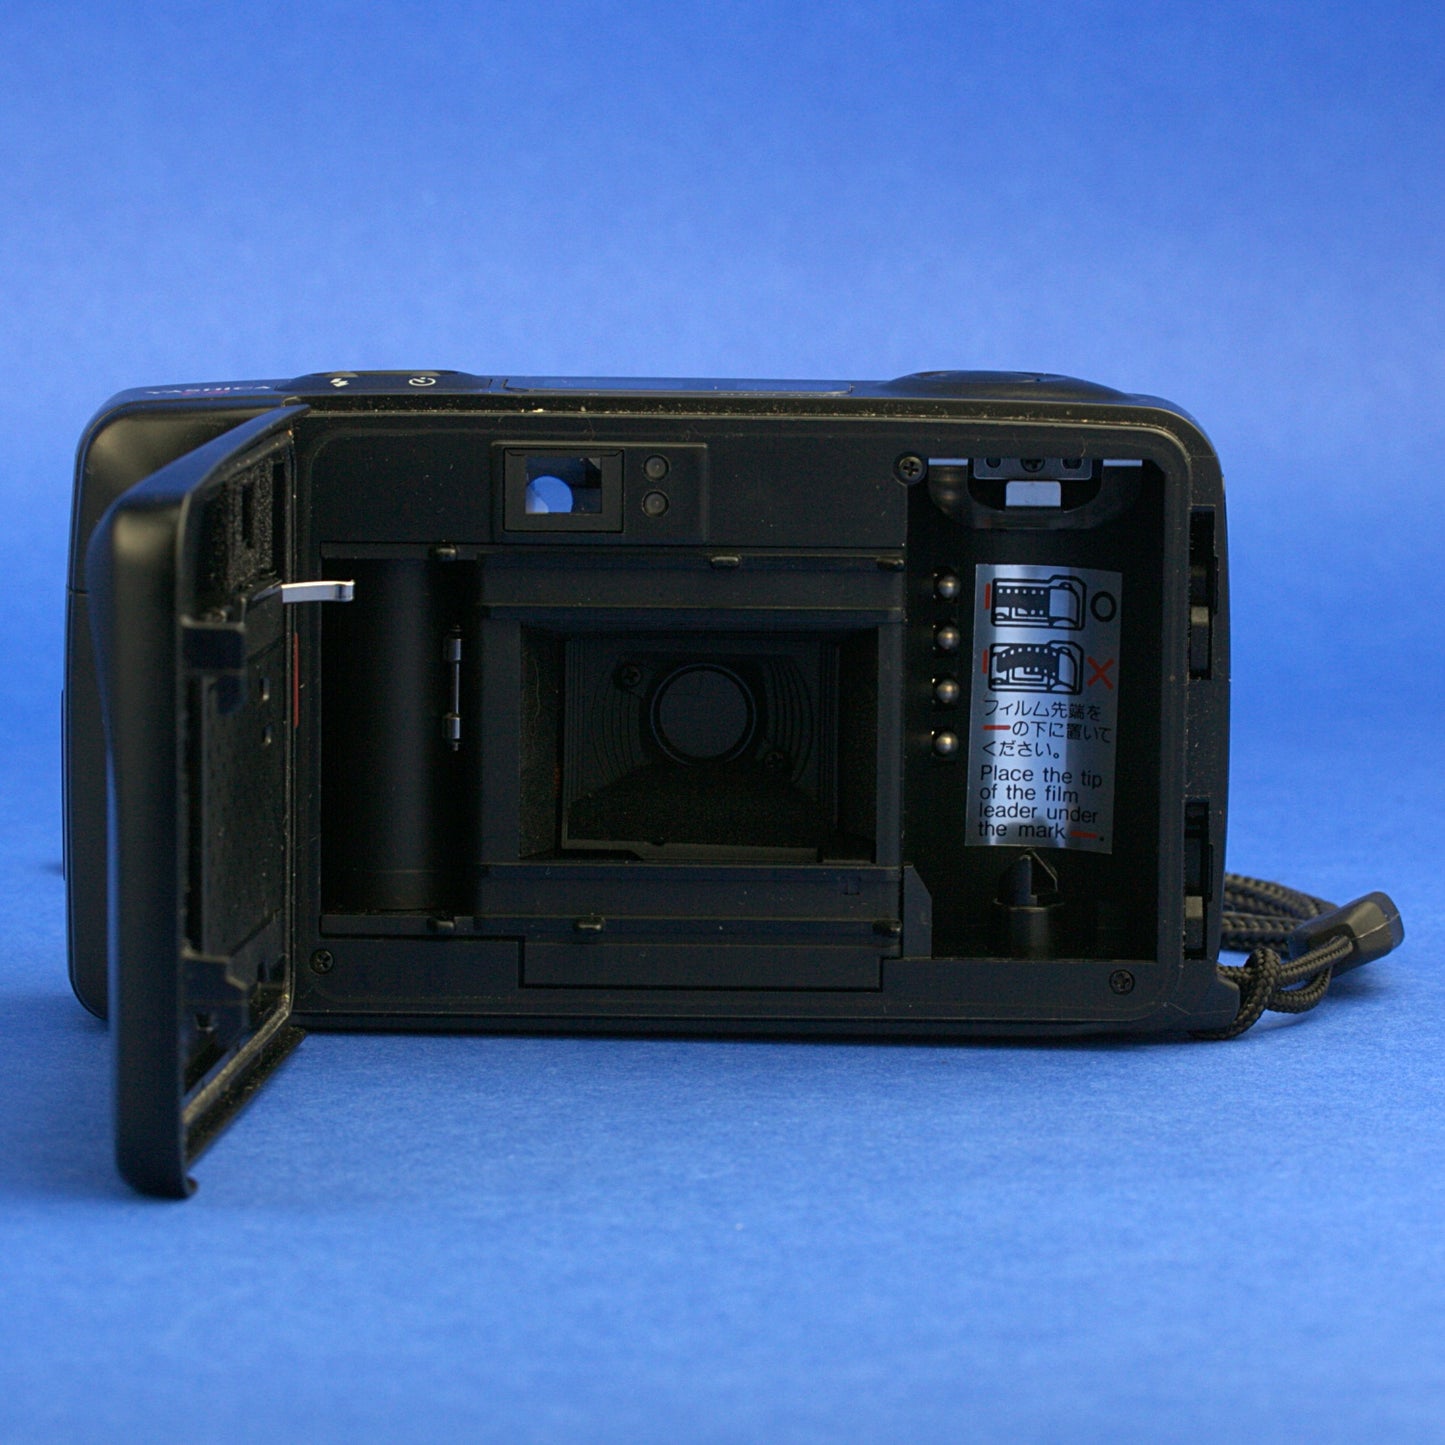 Yashica T5 Film Camera Beautiful Condition